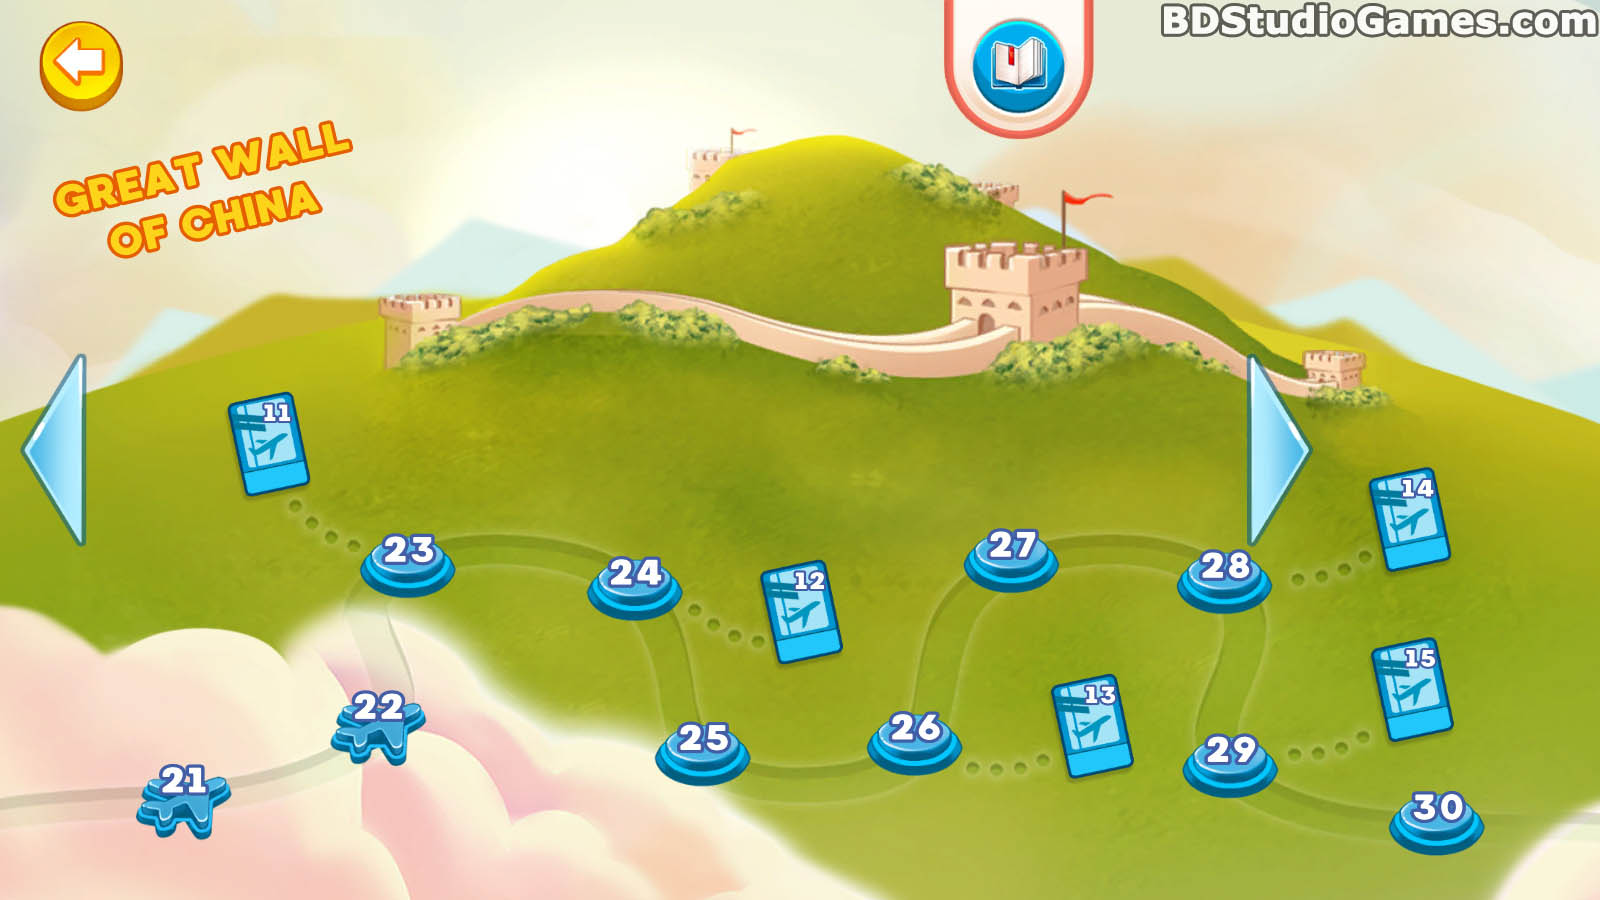 Amber's Airline: 7 Wonders Game Download Screenshots 07